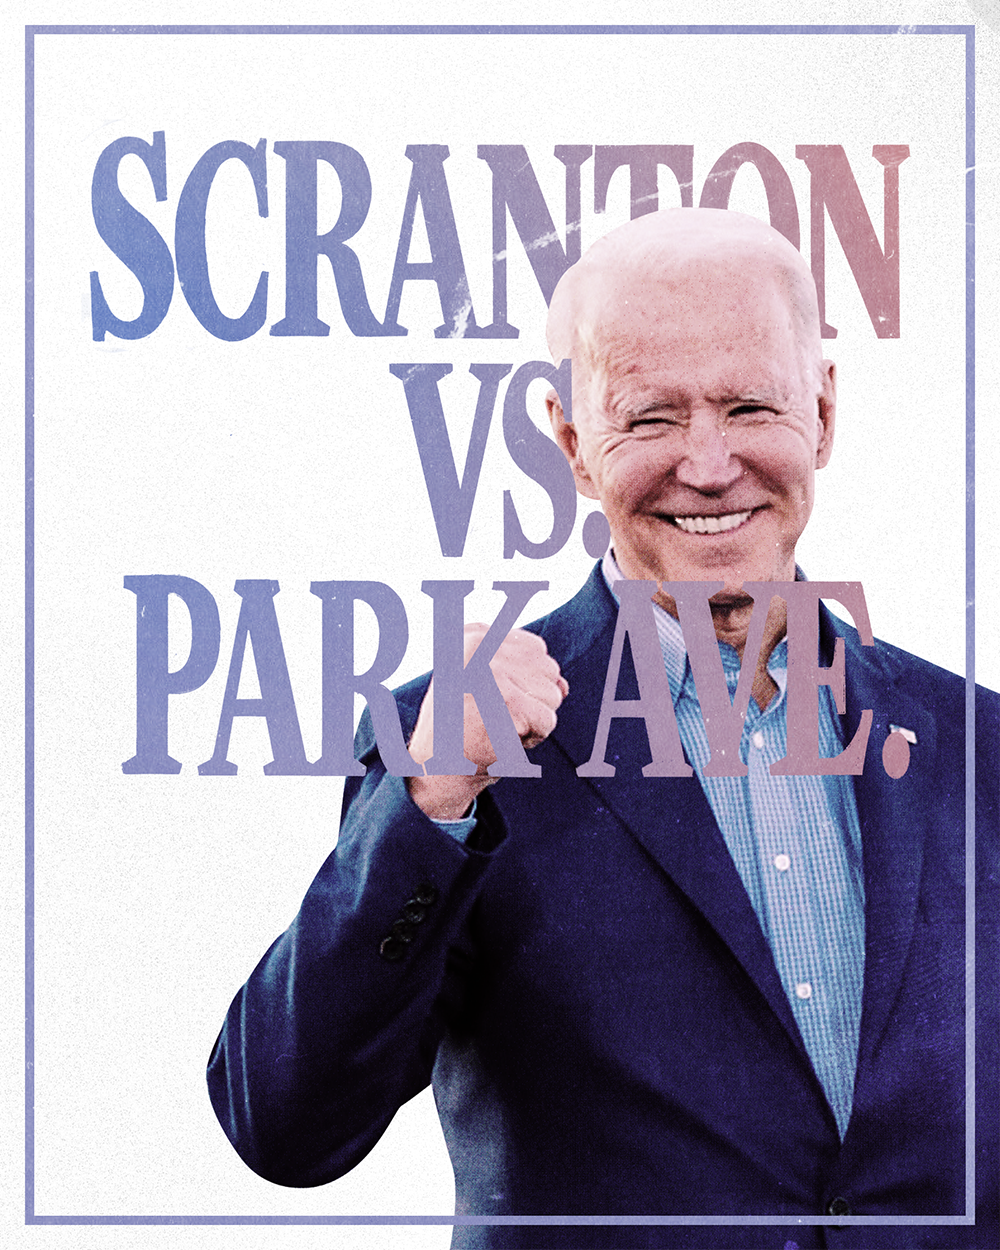 Scranton-vs-Park-Ave_social-gfx_HQ_IG_CM-1.png